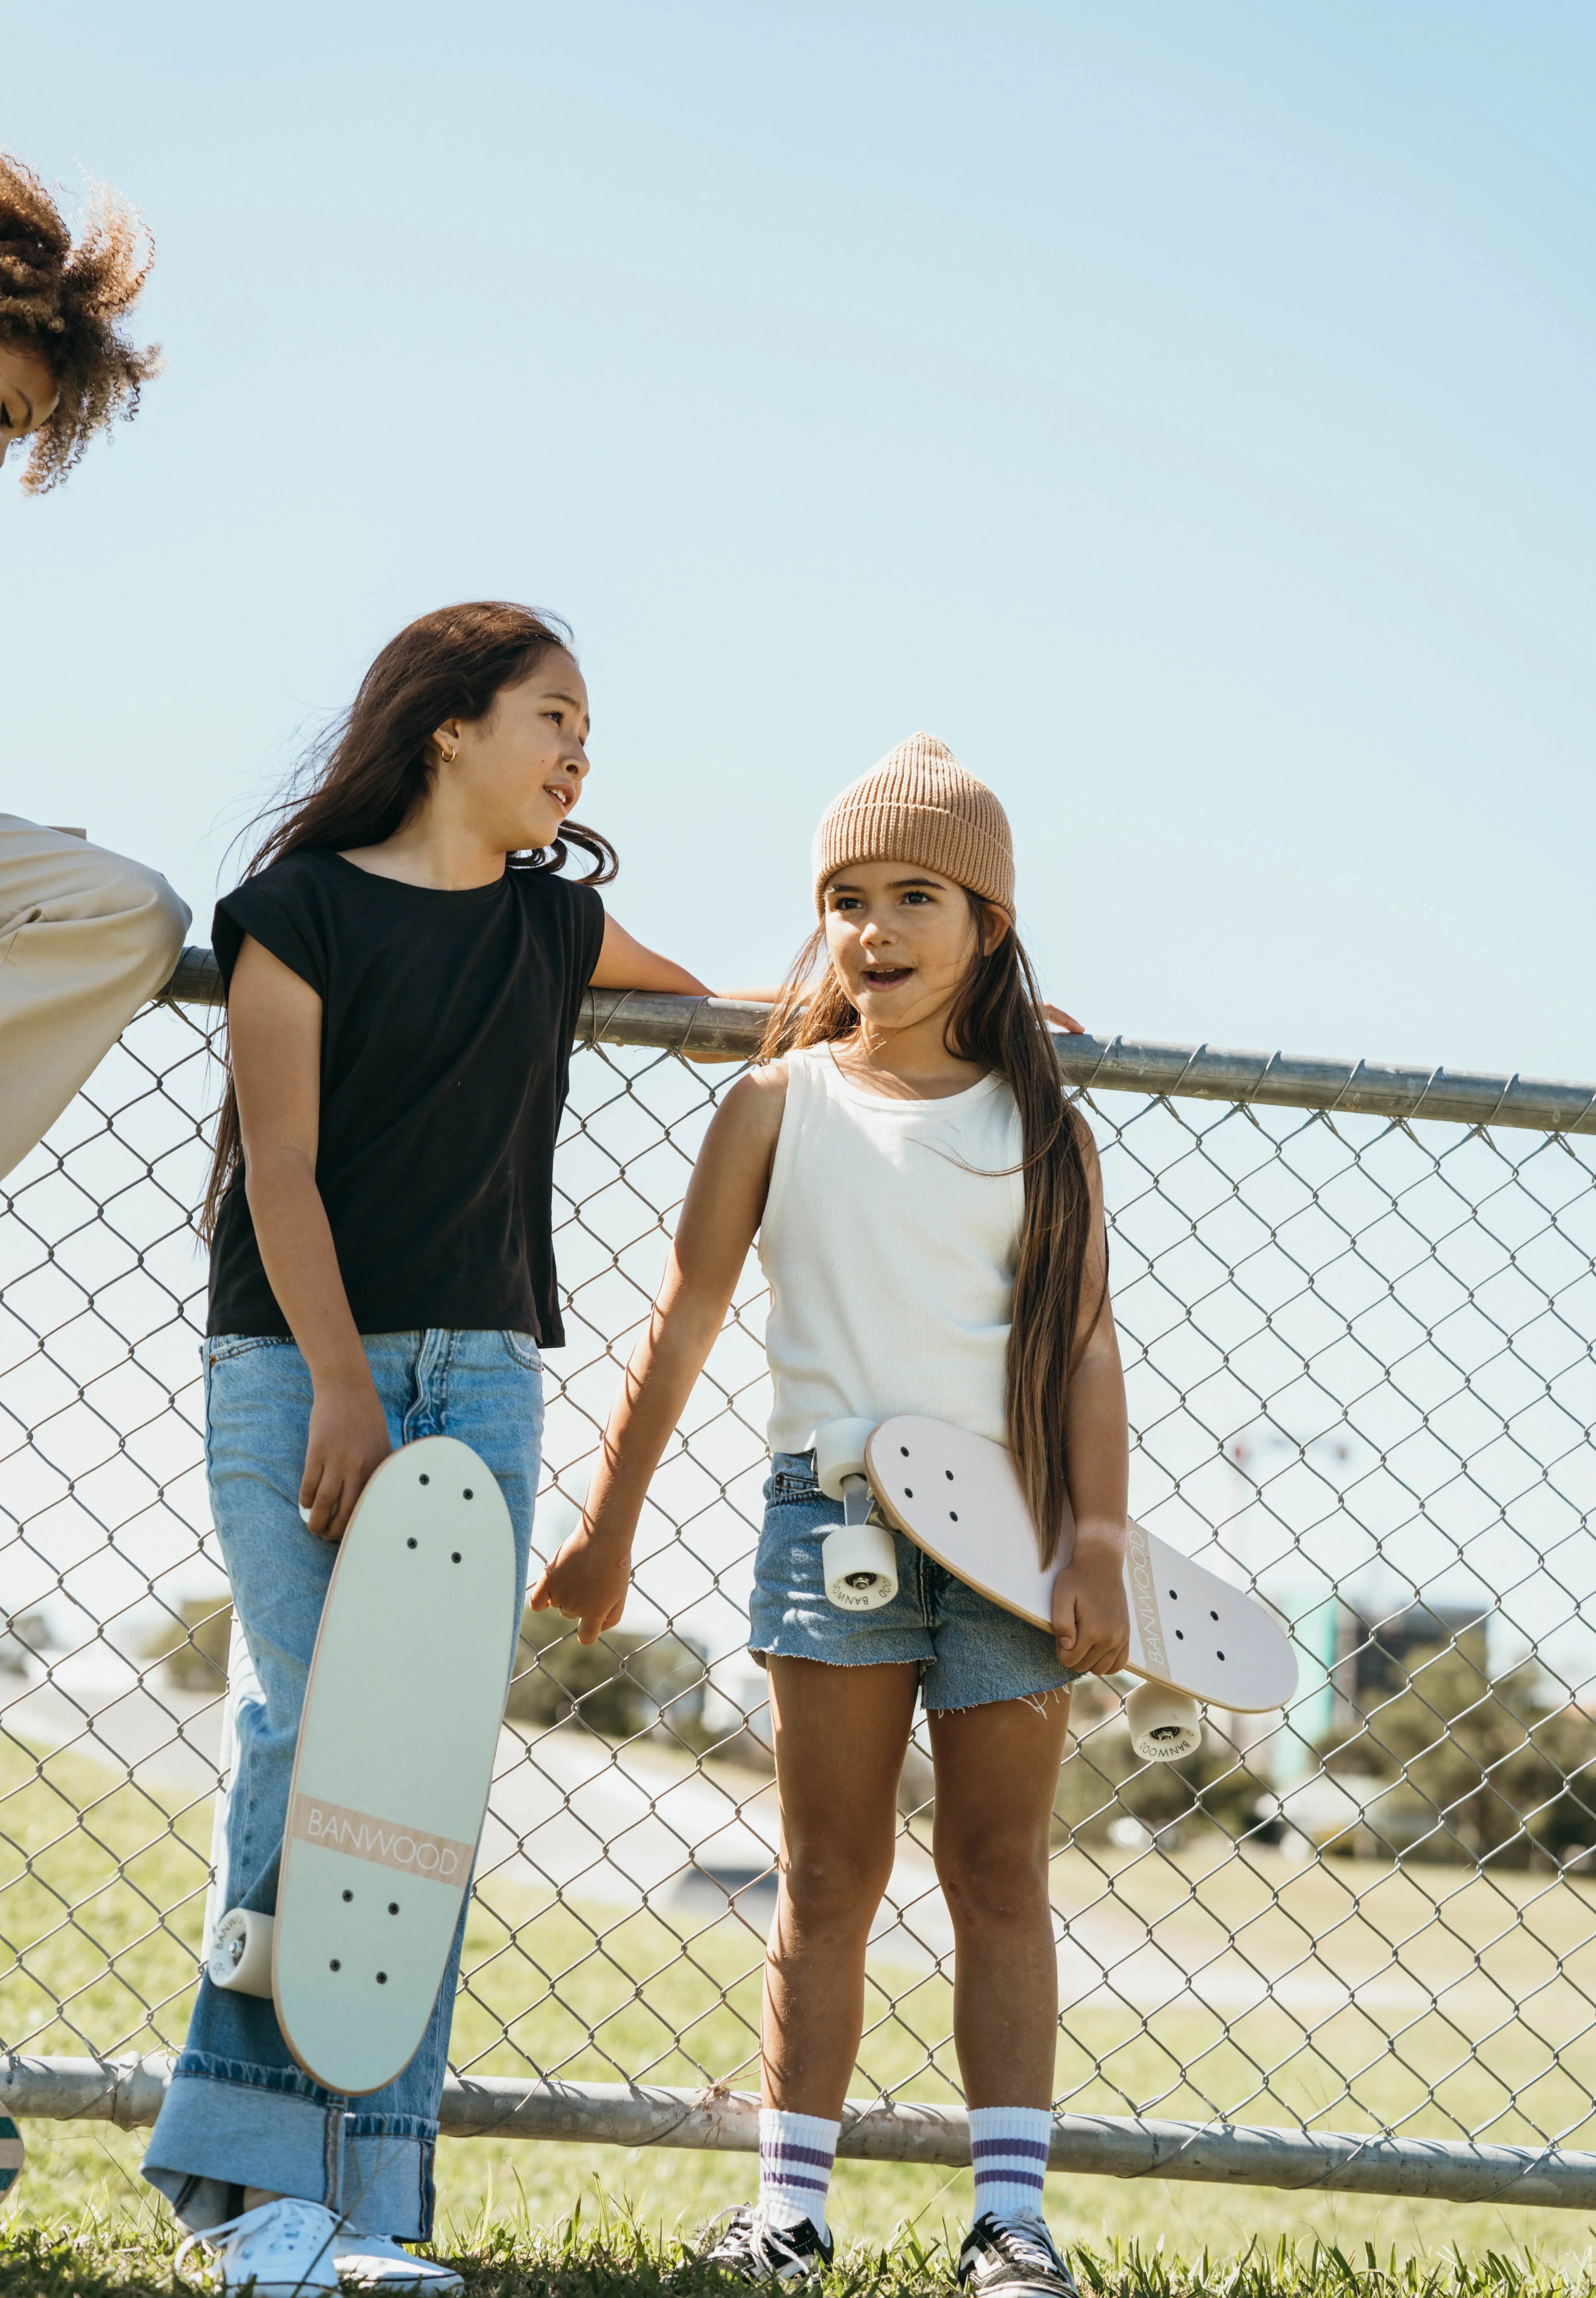 Child Skateboard, Mint  Banwood   